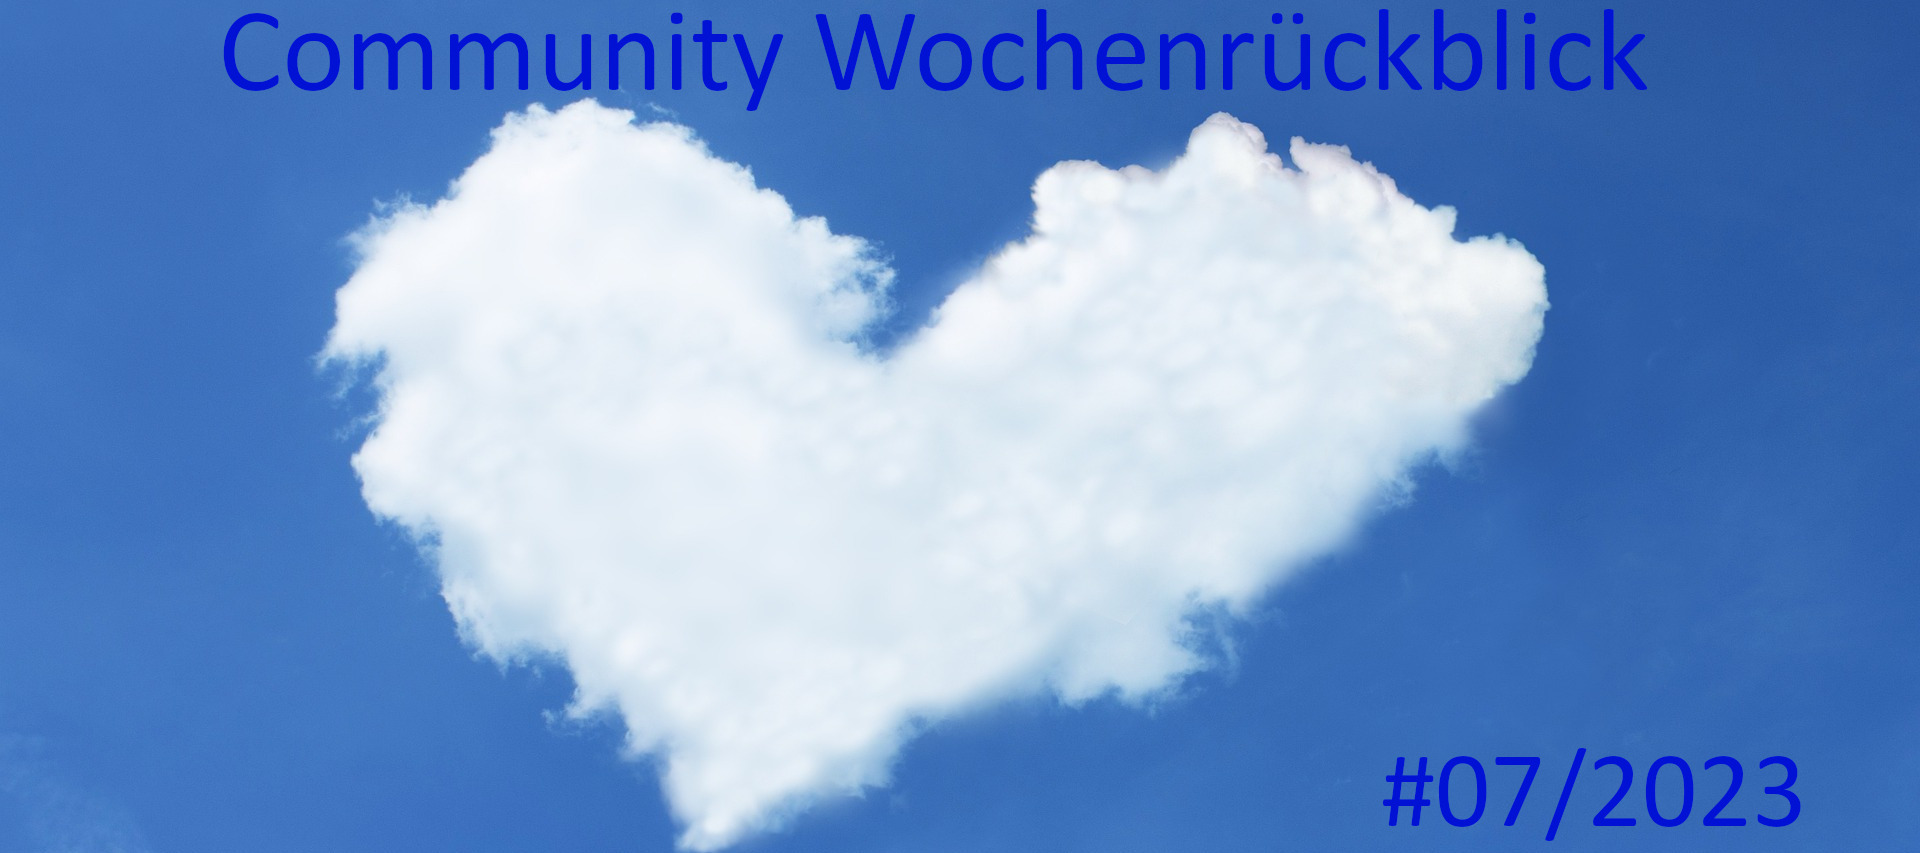 Community Wochenrückblick #07/2023